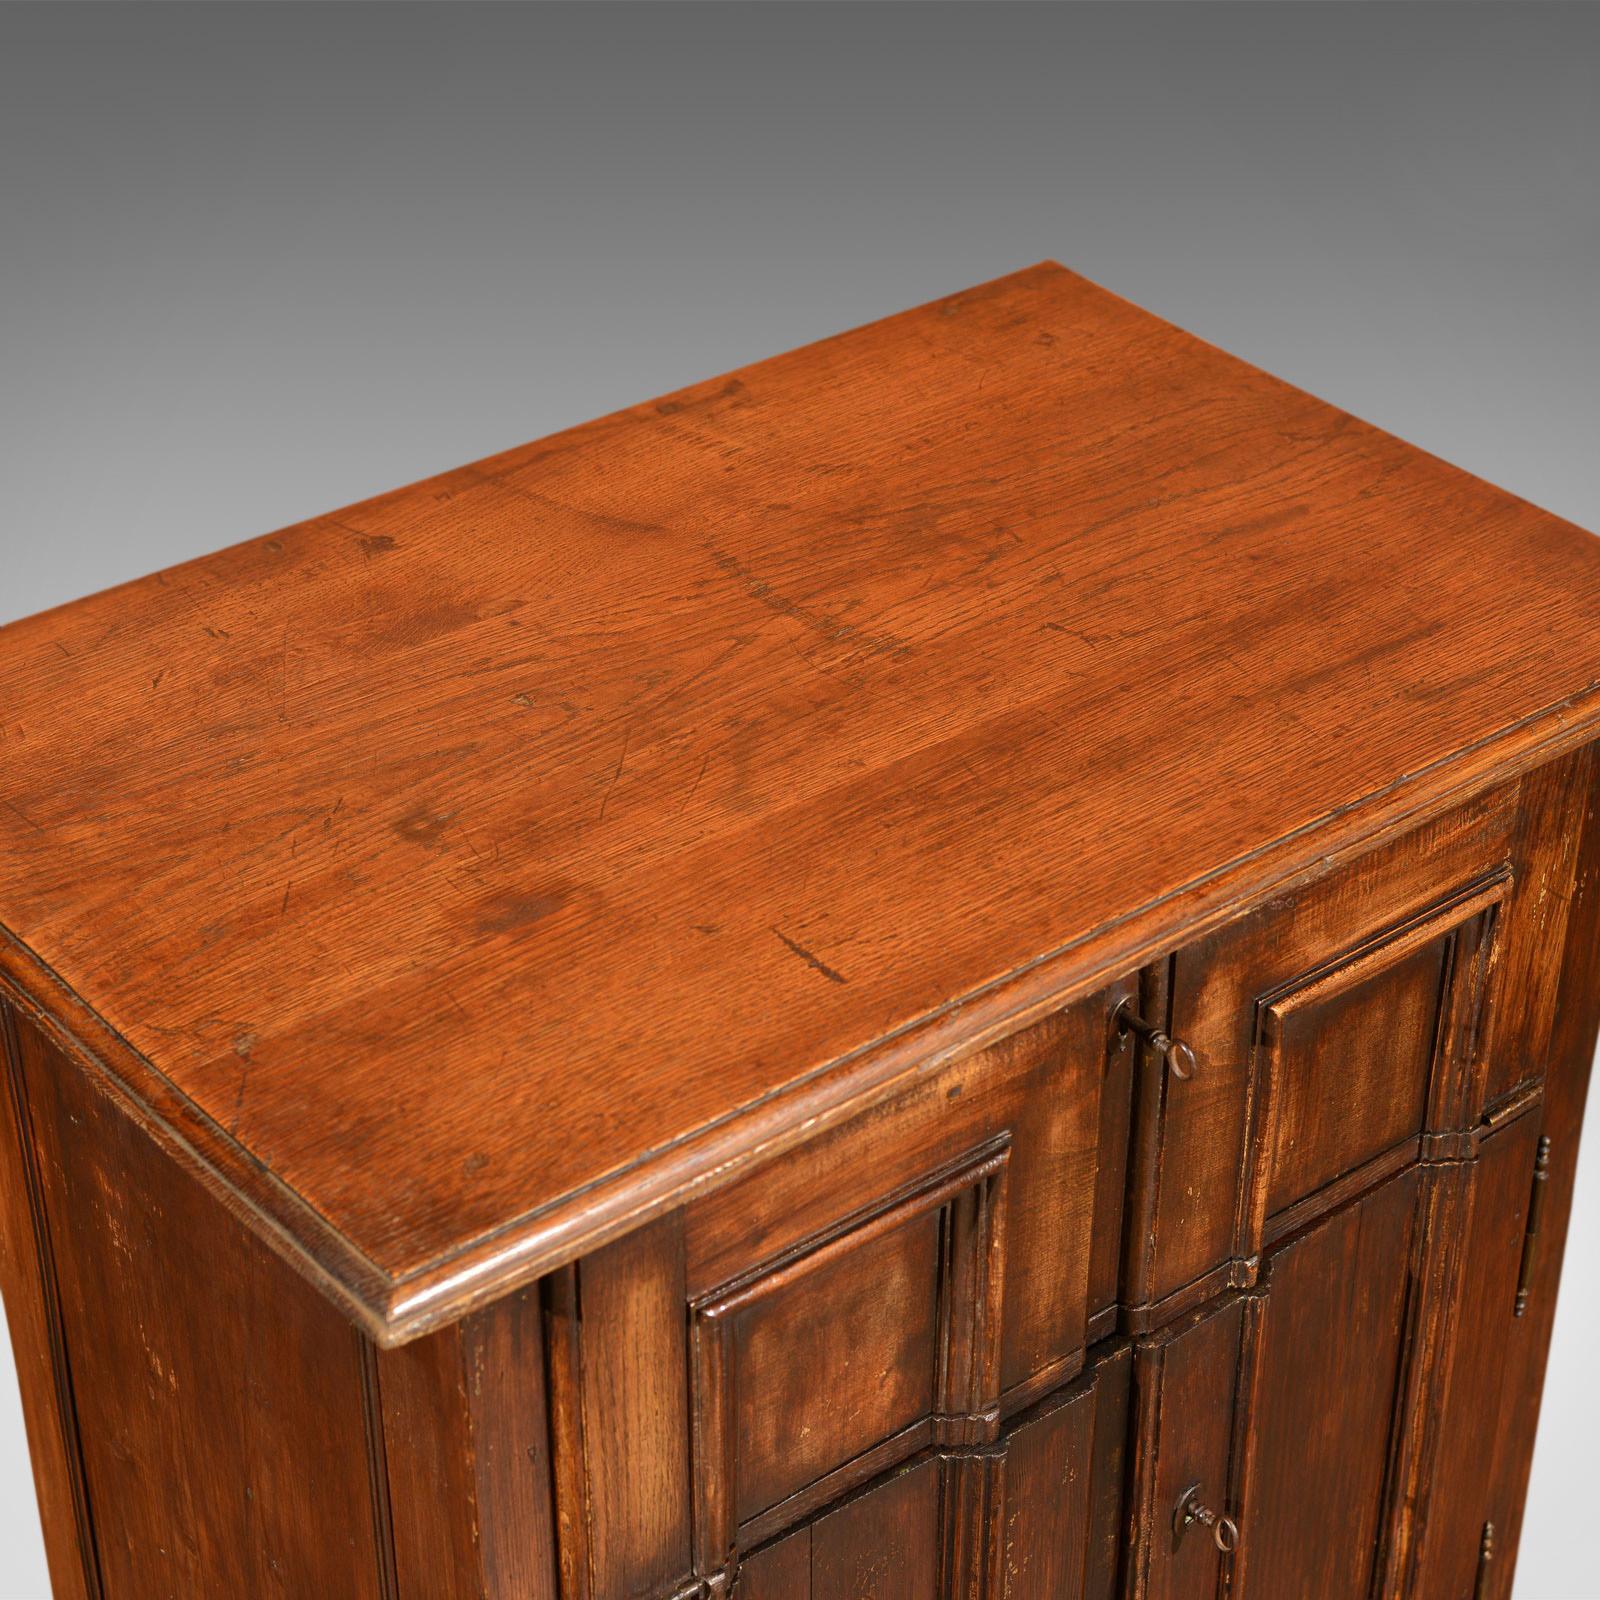 French Provincial Antique Specimen Cabinet, French Oak Cupboard, Secretaire, Desk, circa 1850 For Sale